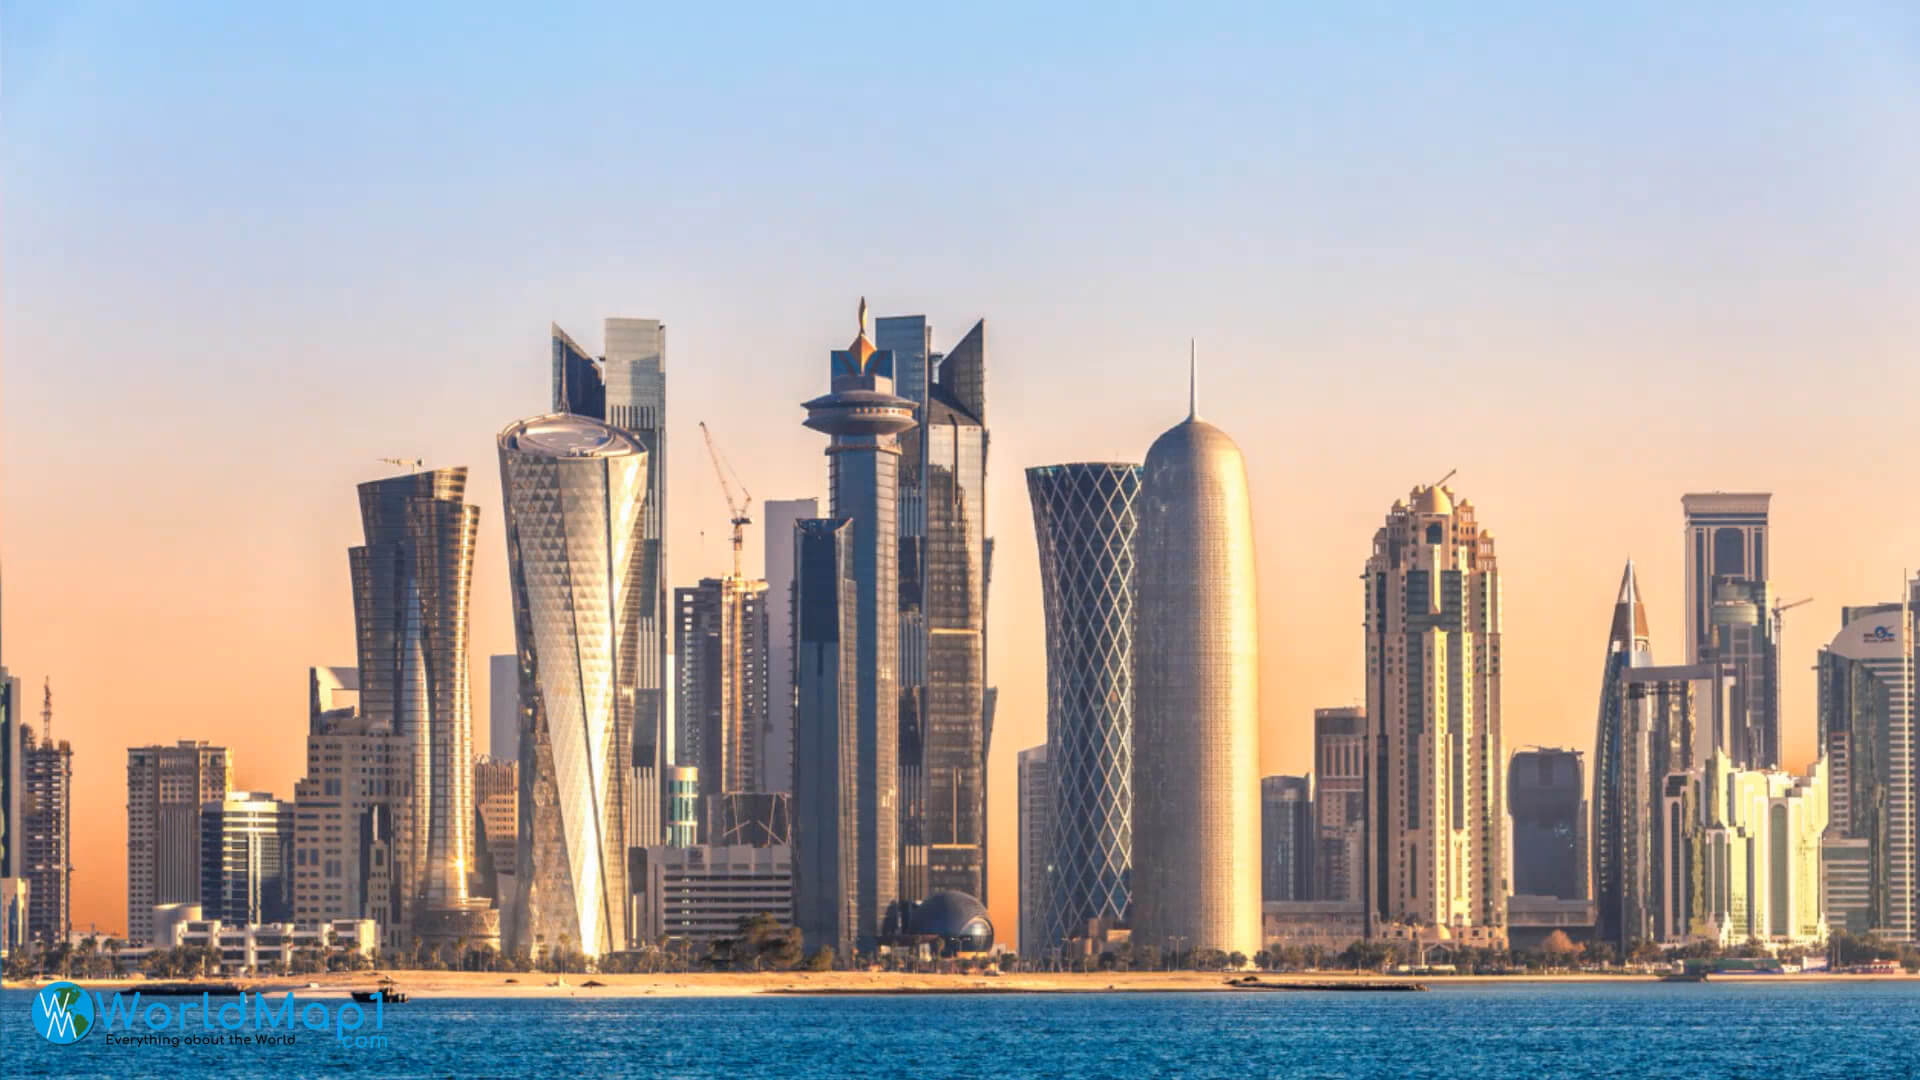 Skylines in Doha